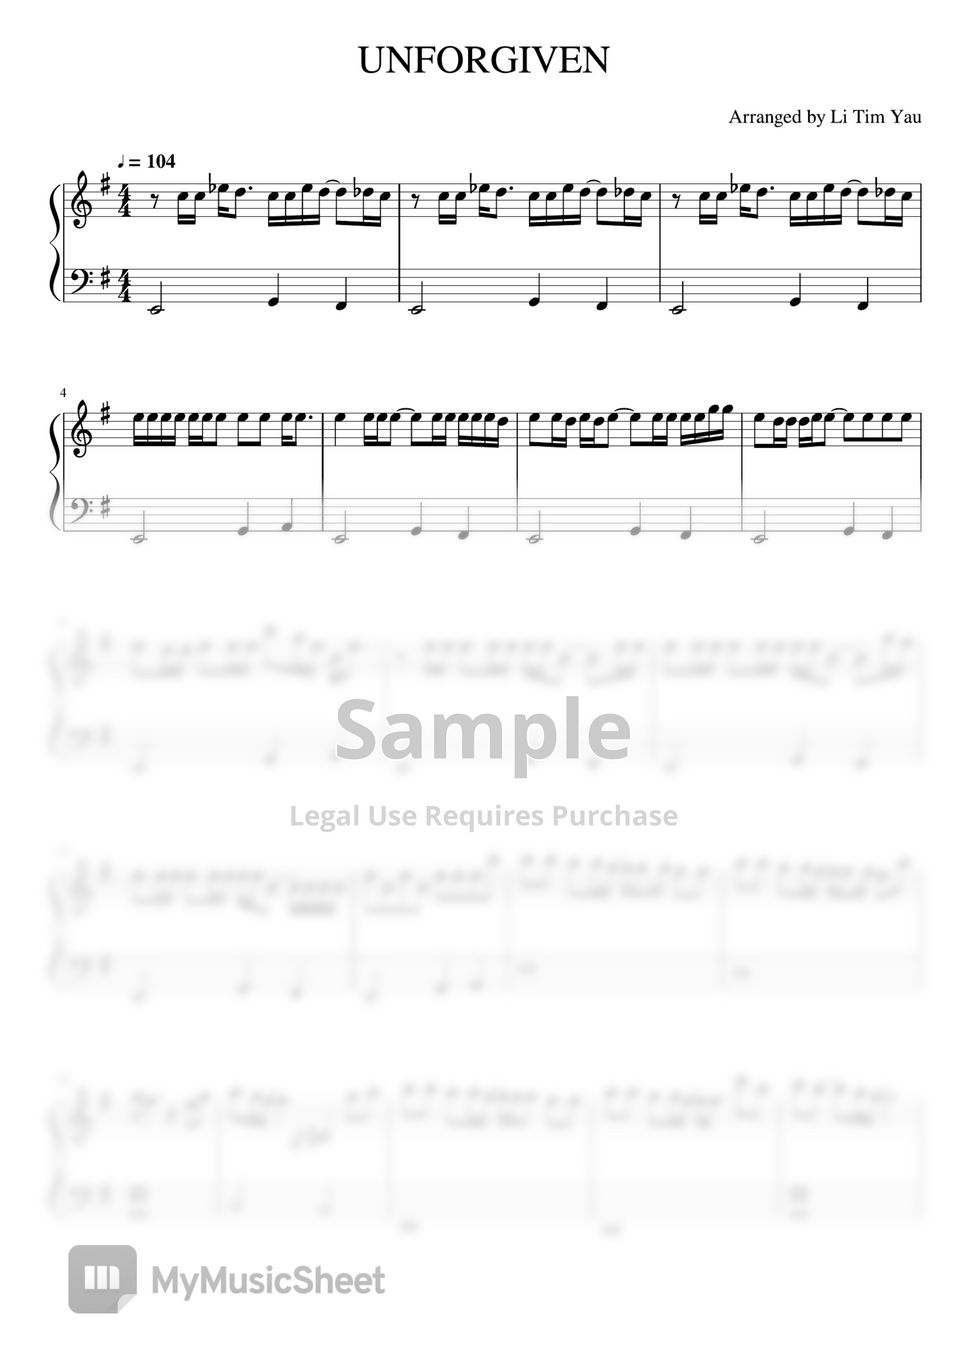 LE SSERAFIM - UNFORGIVEN (Piano Cover) 曲谱 by Li Tim Yau